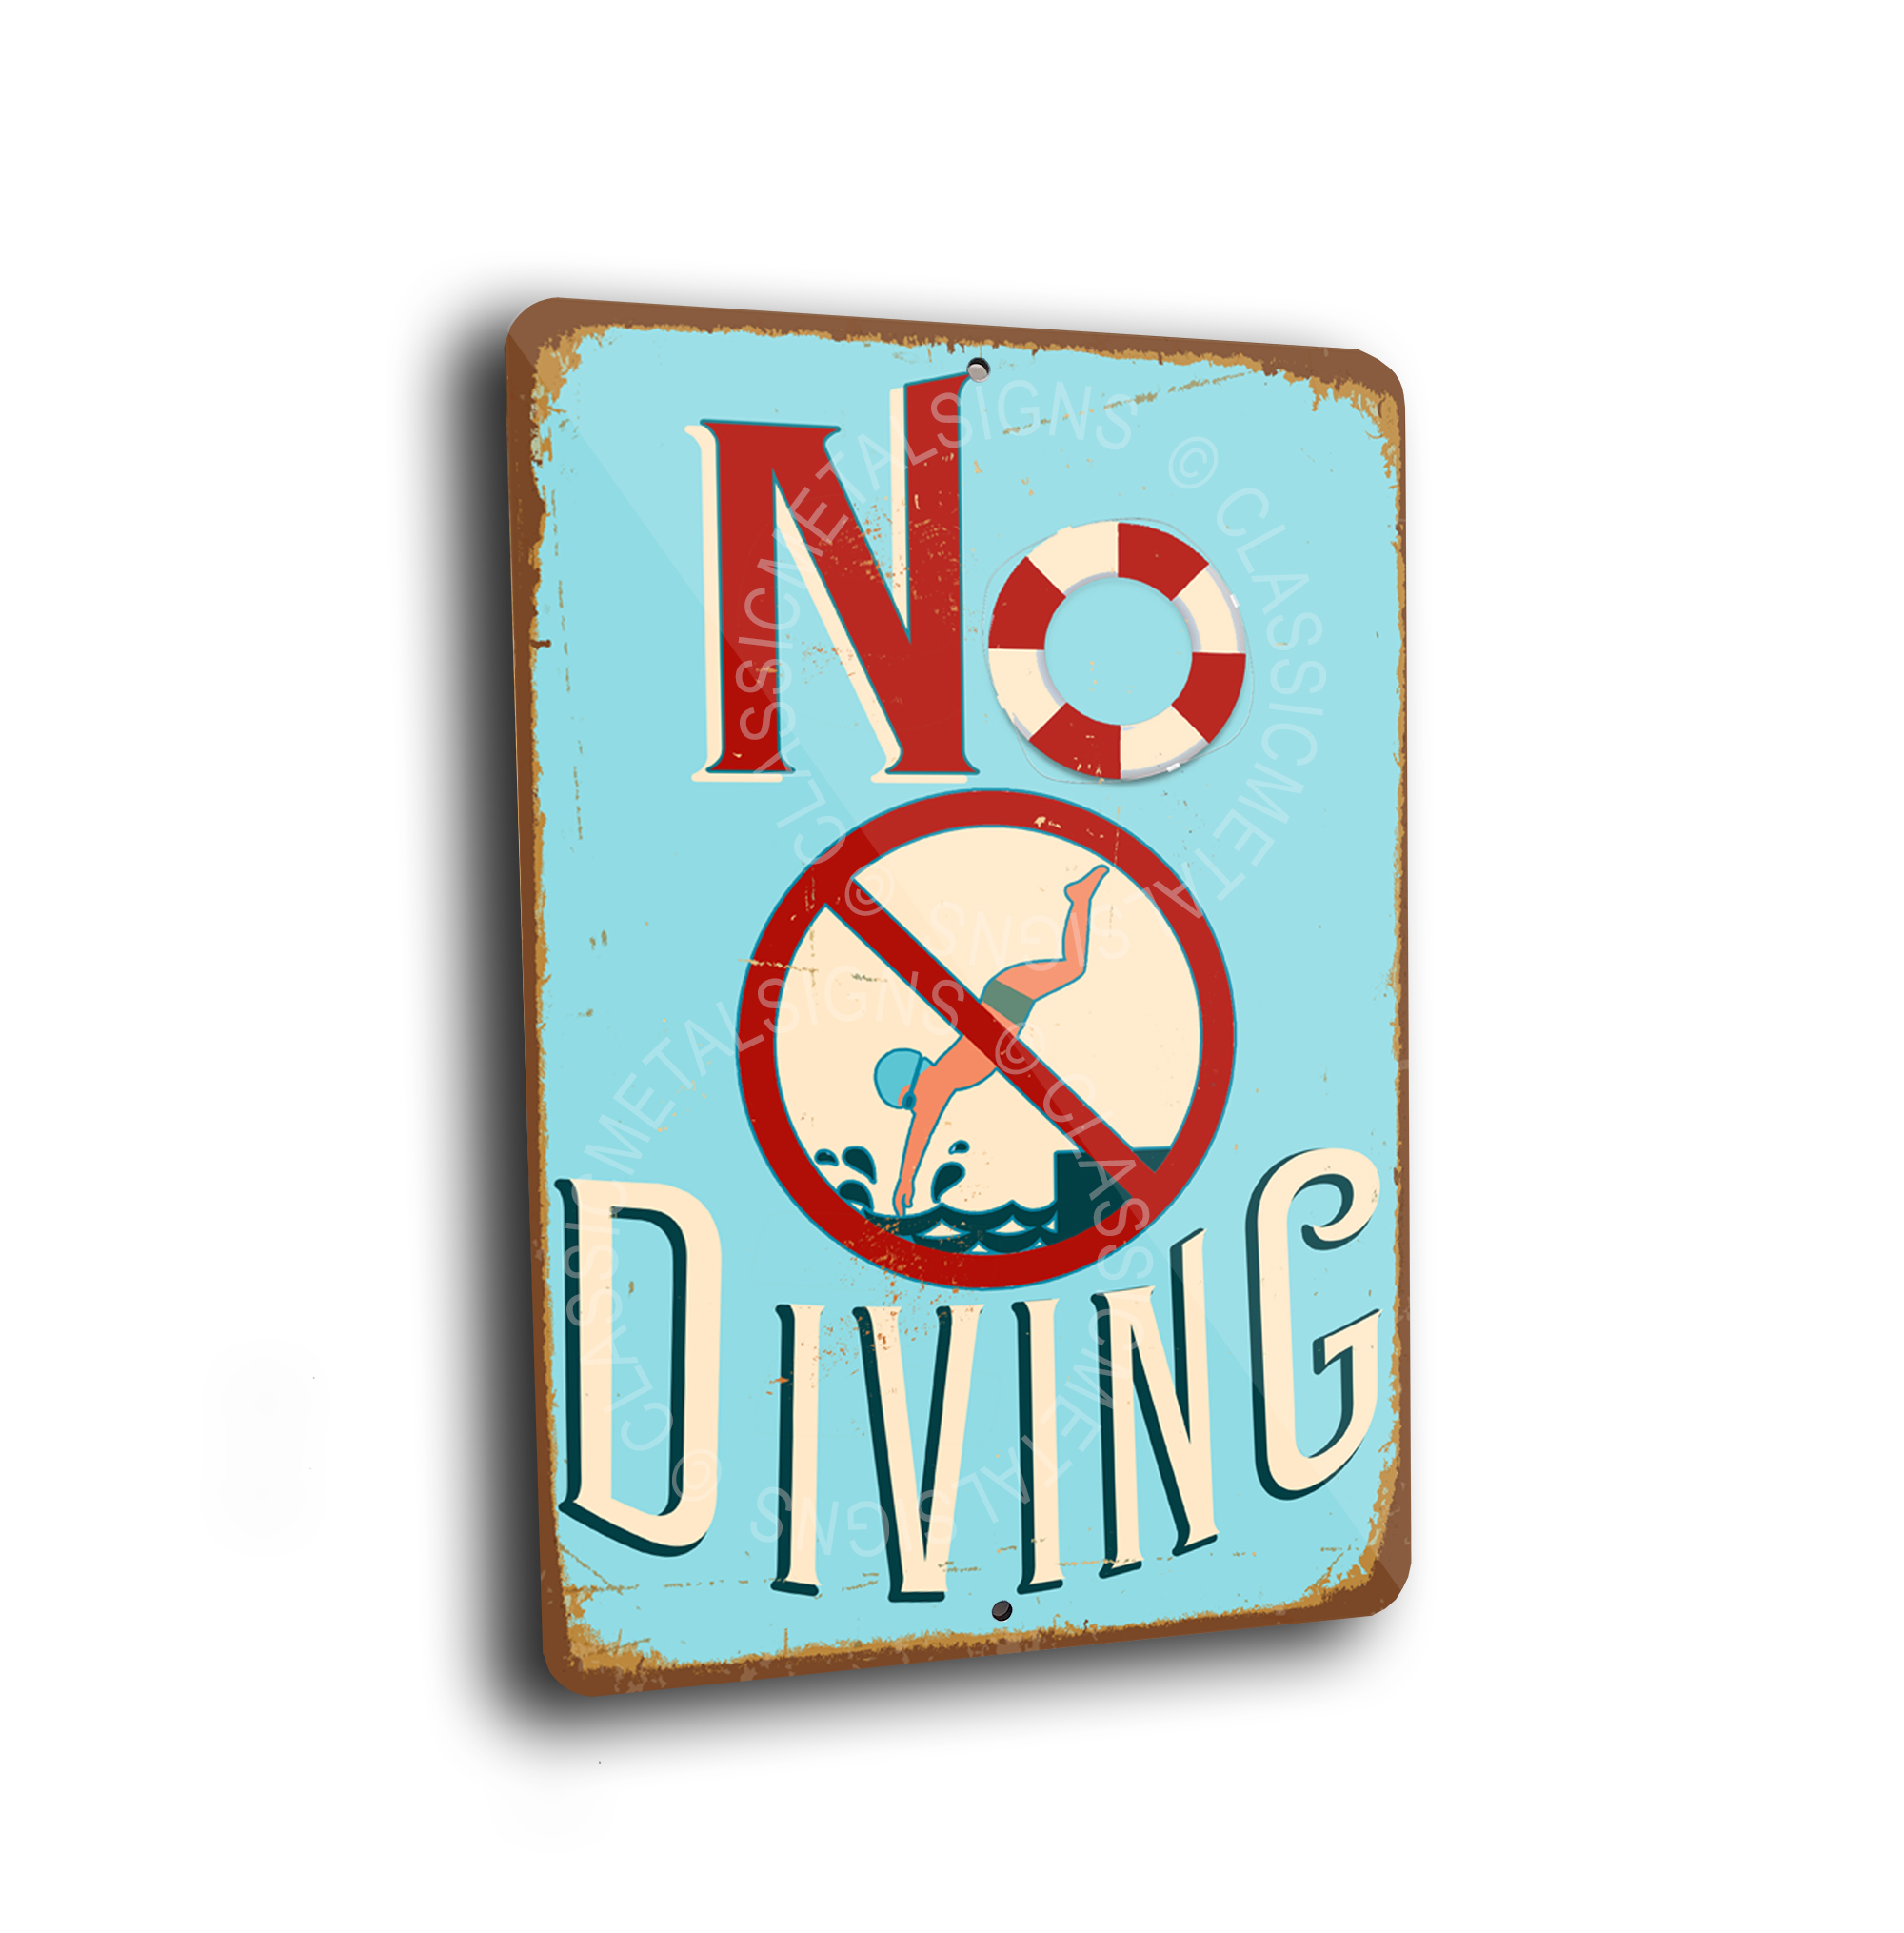 No Diving Pool Sign